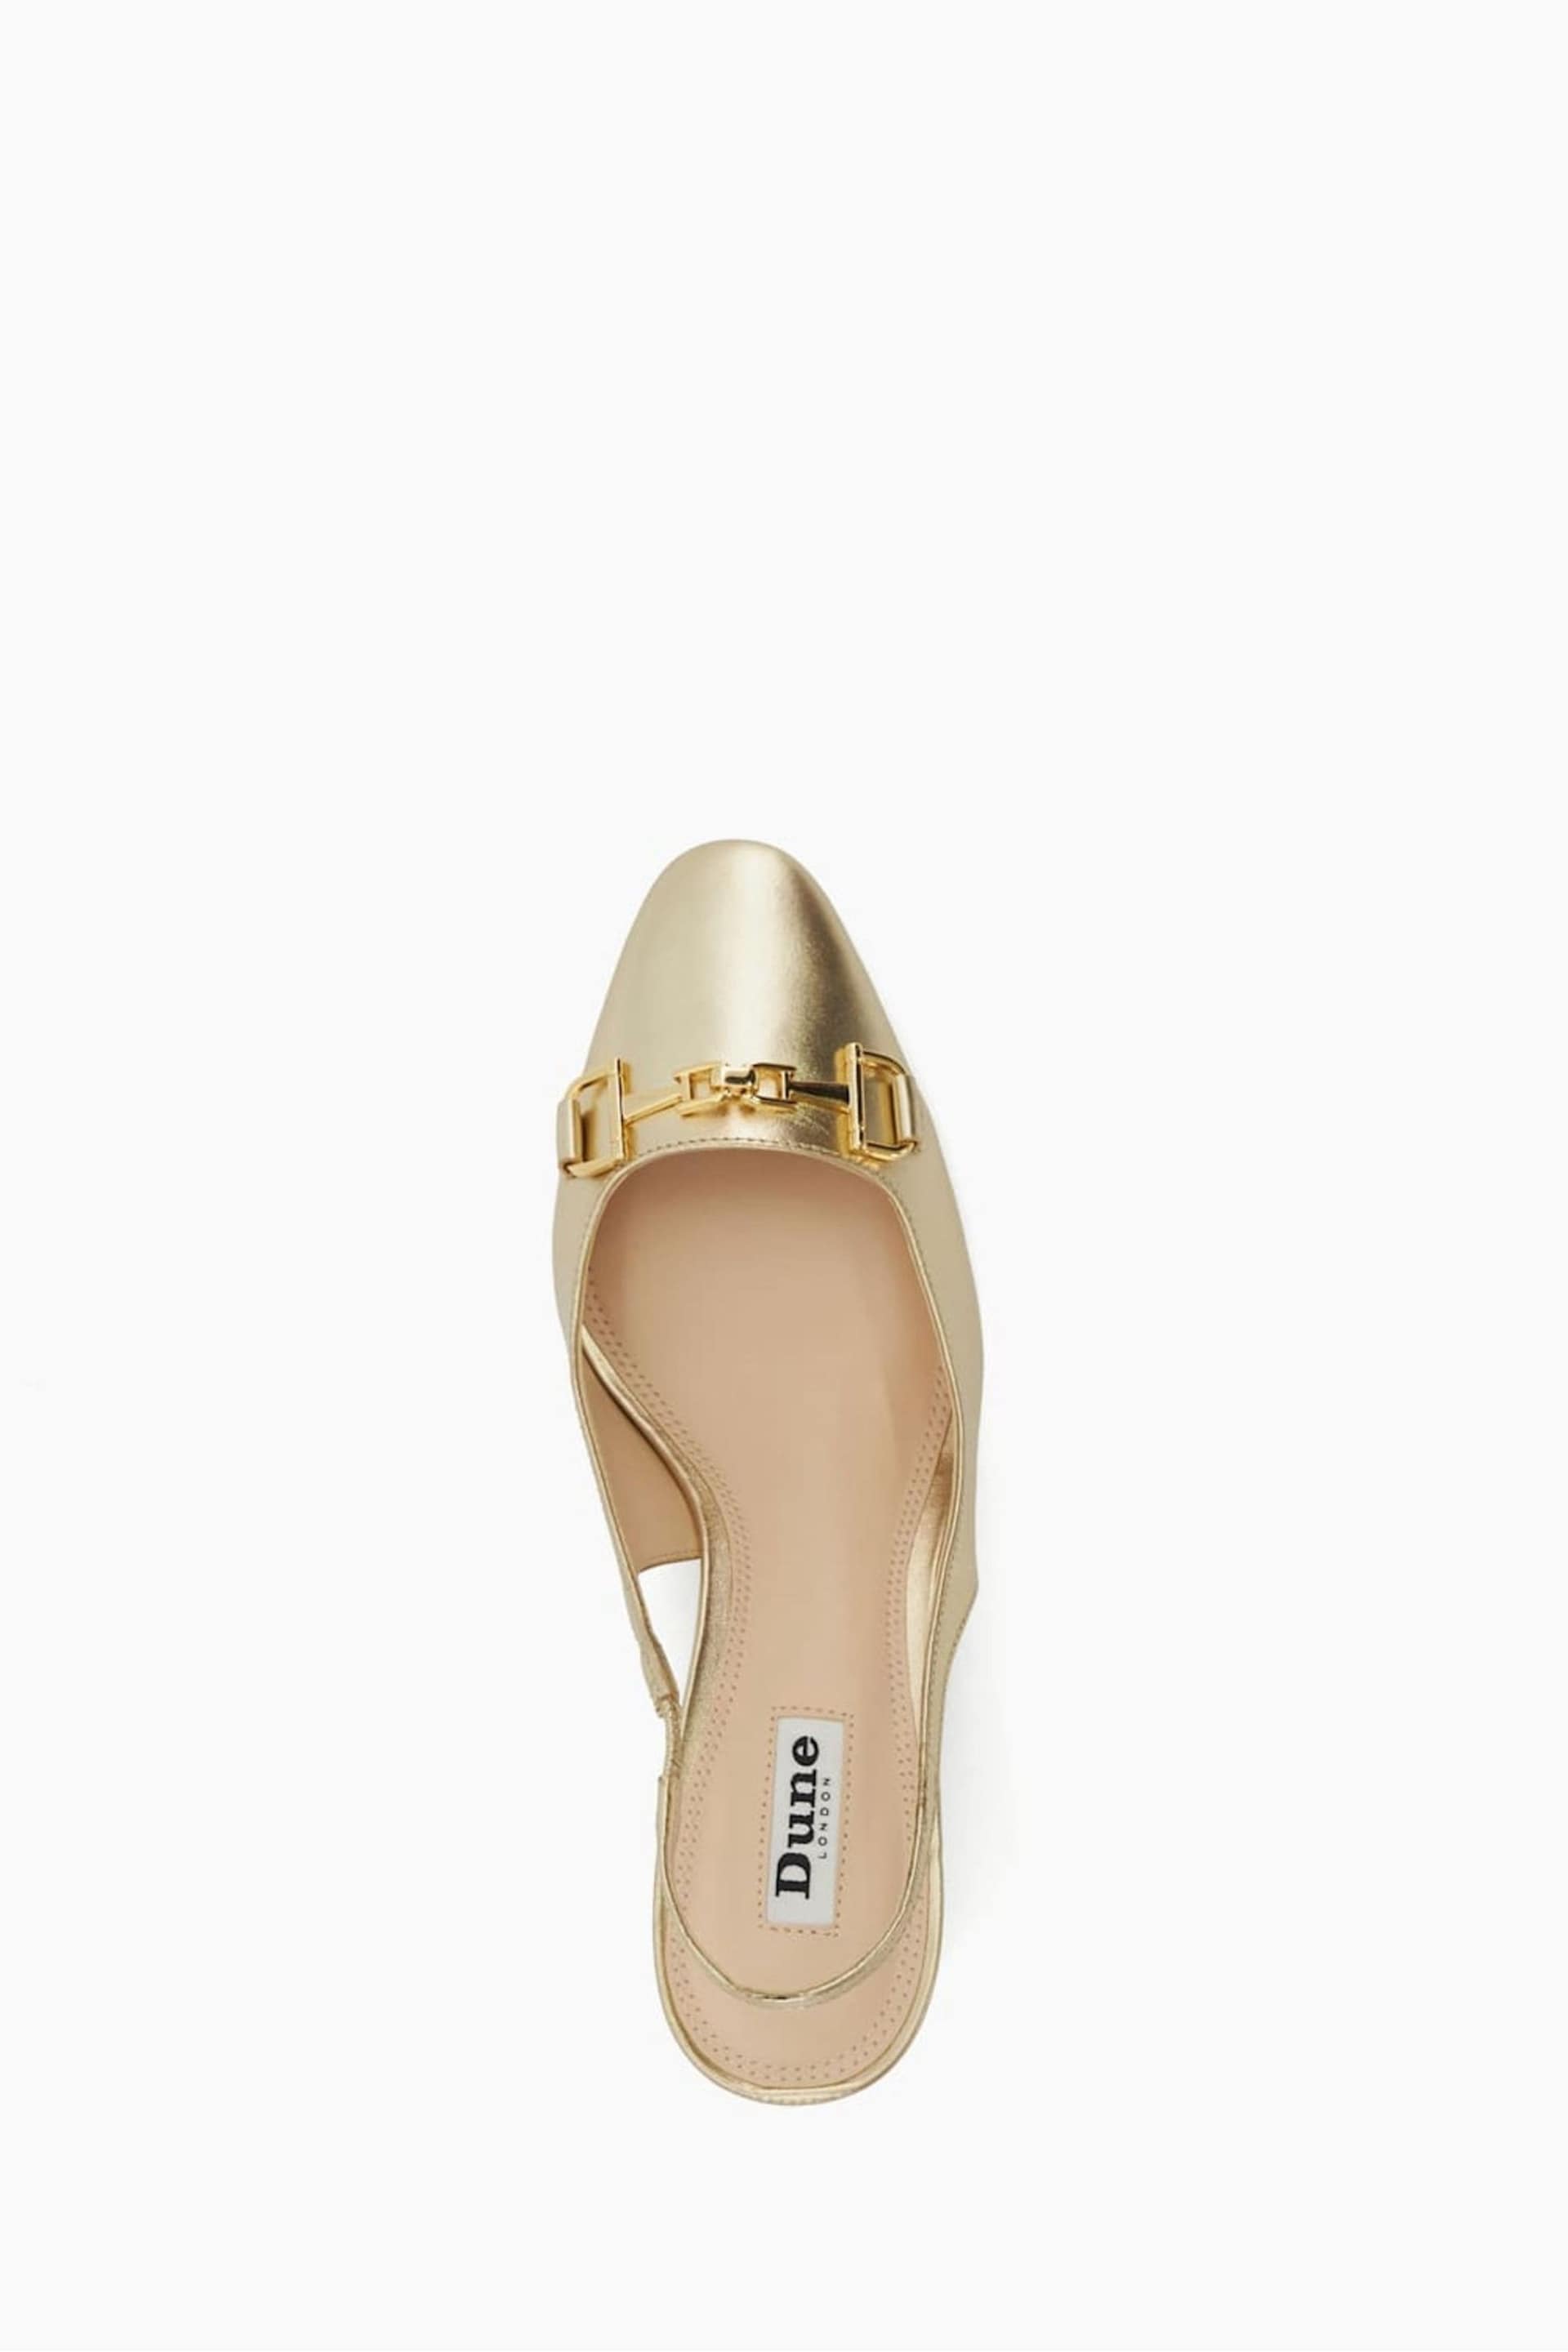 Dune London Gold Detailed Block Heel Snaffle Slingback Shoes - Image 4 of 4